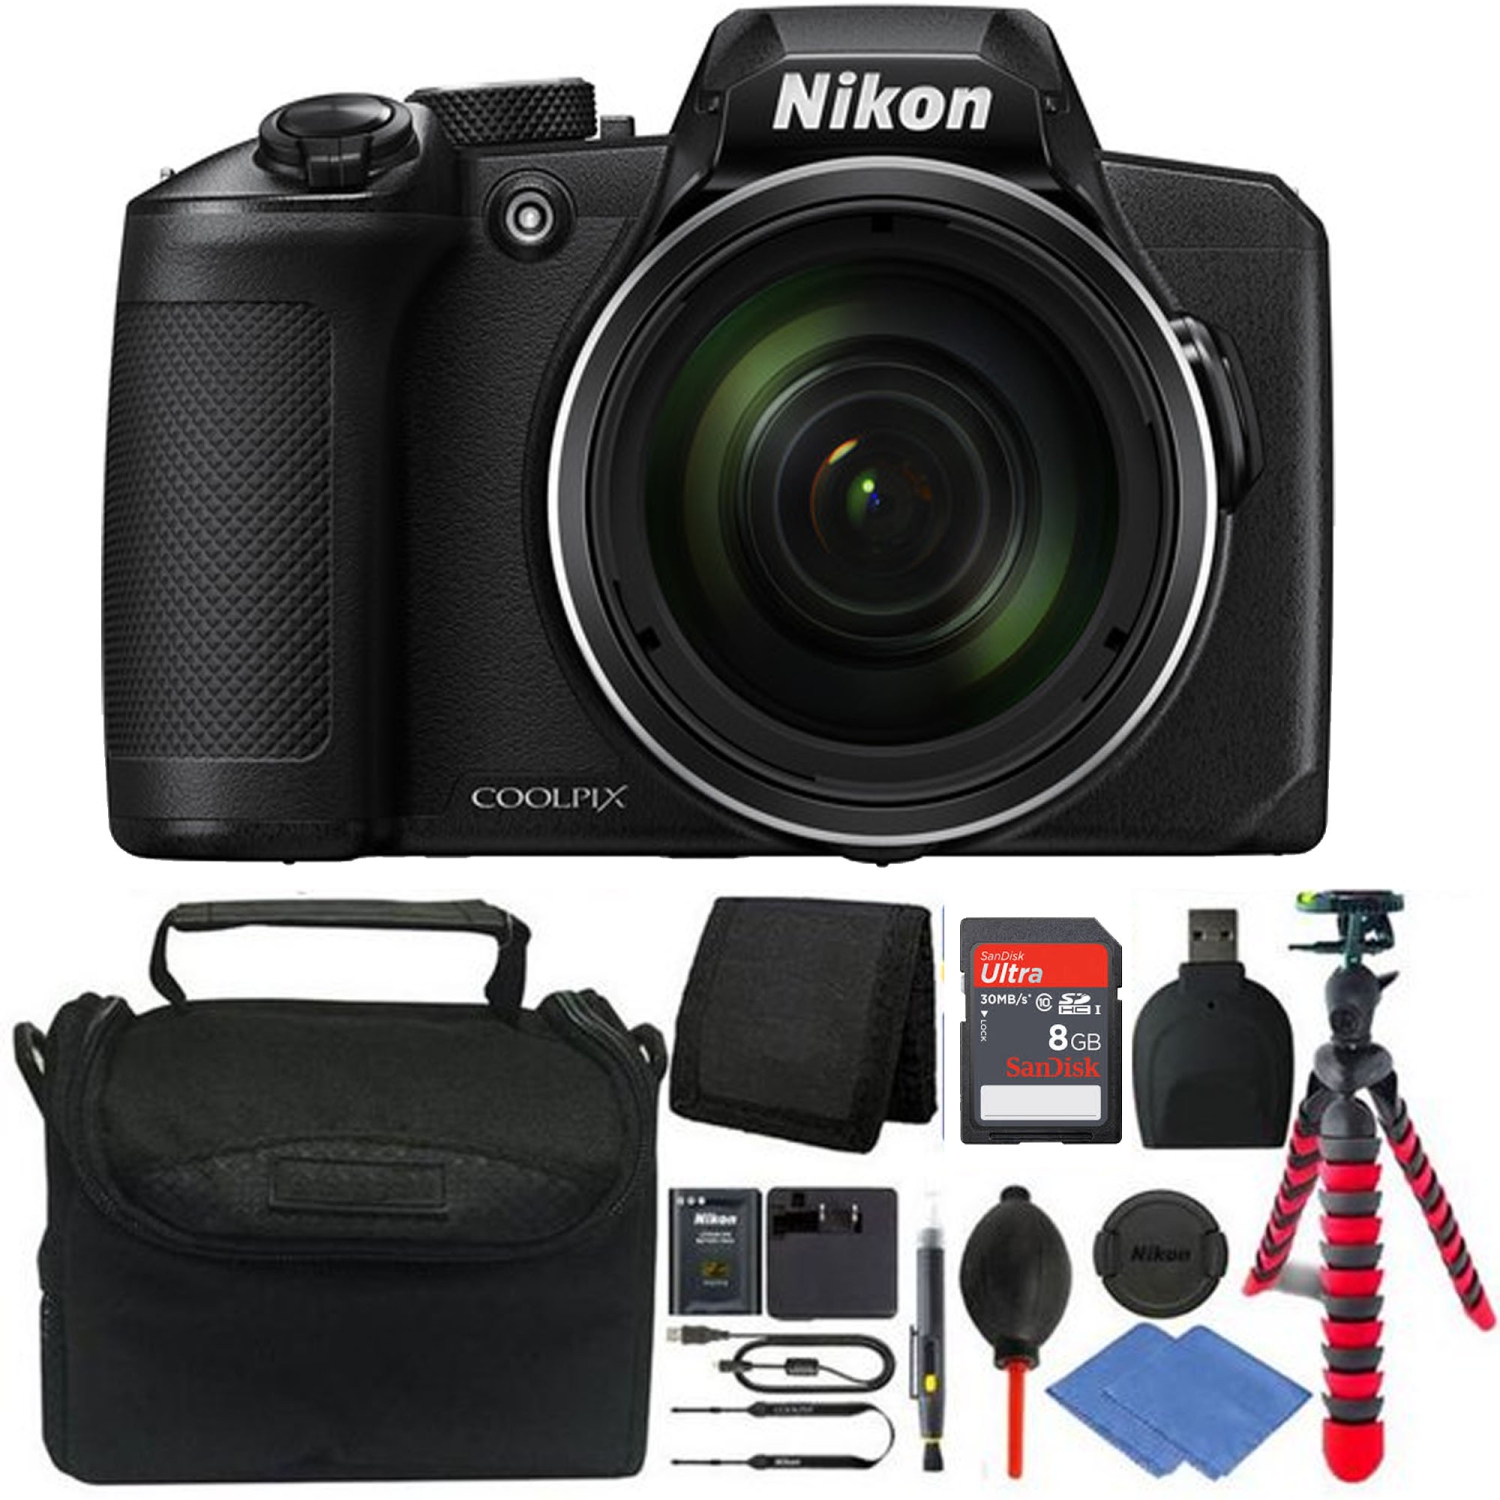 Nikon COOLPIX B600 Digital Camera (Black) with 8GB Memory Card Starter Bundle - US Version w/ Seller Warranty